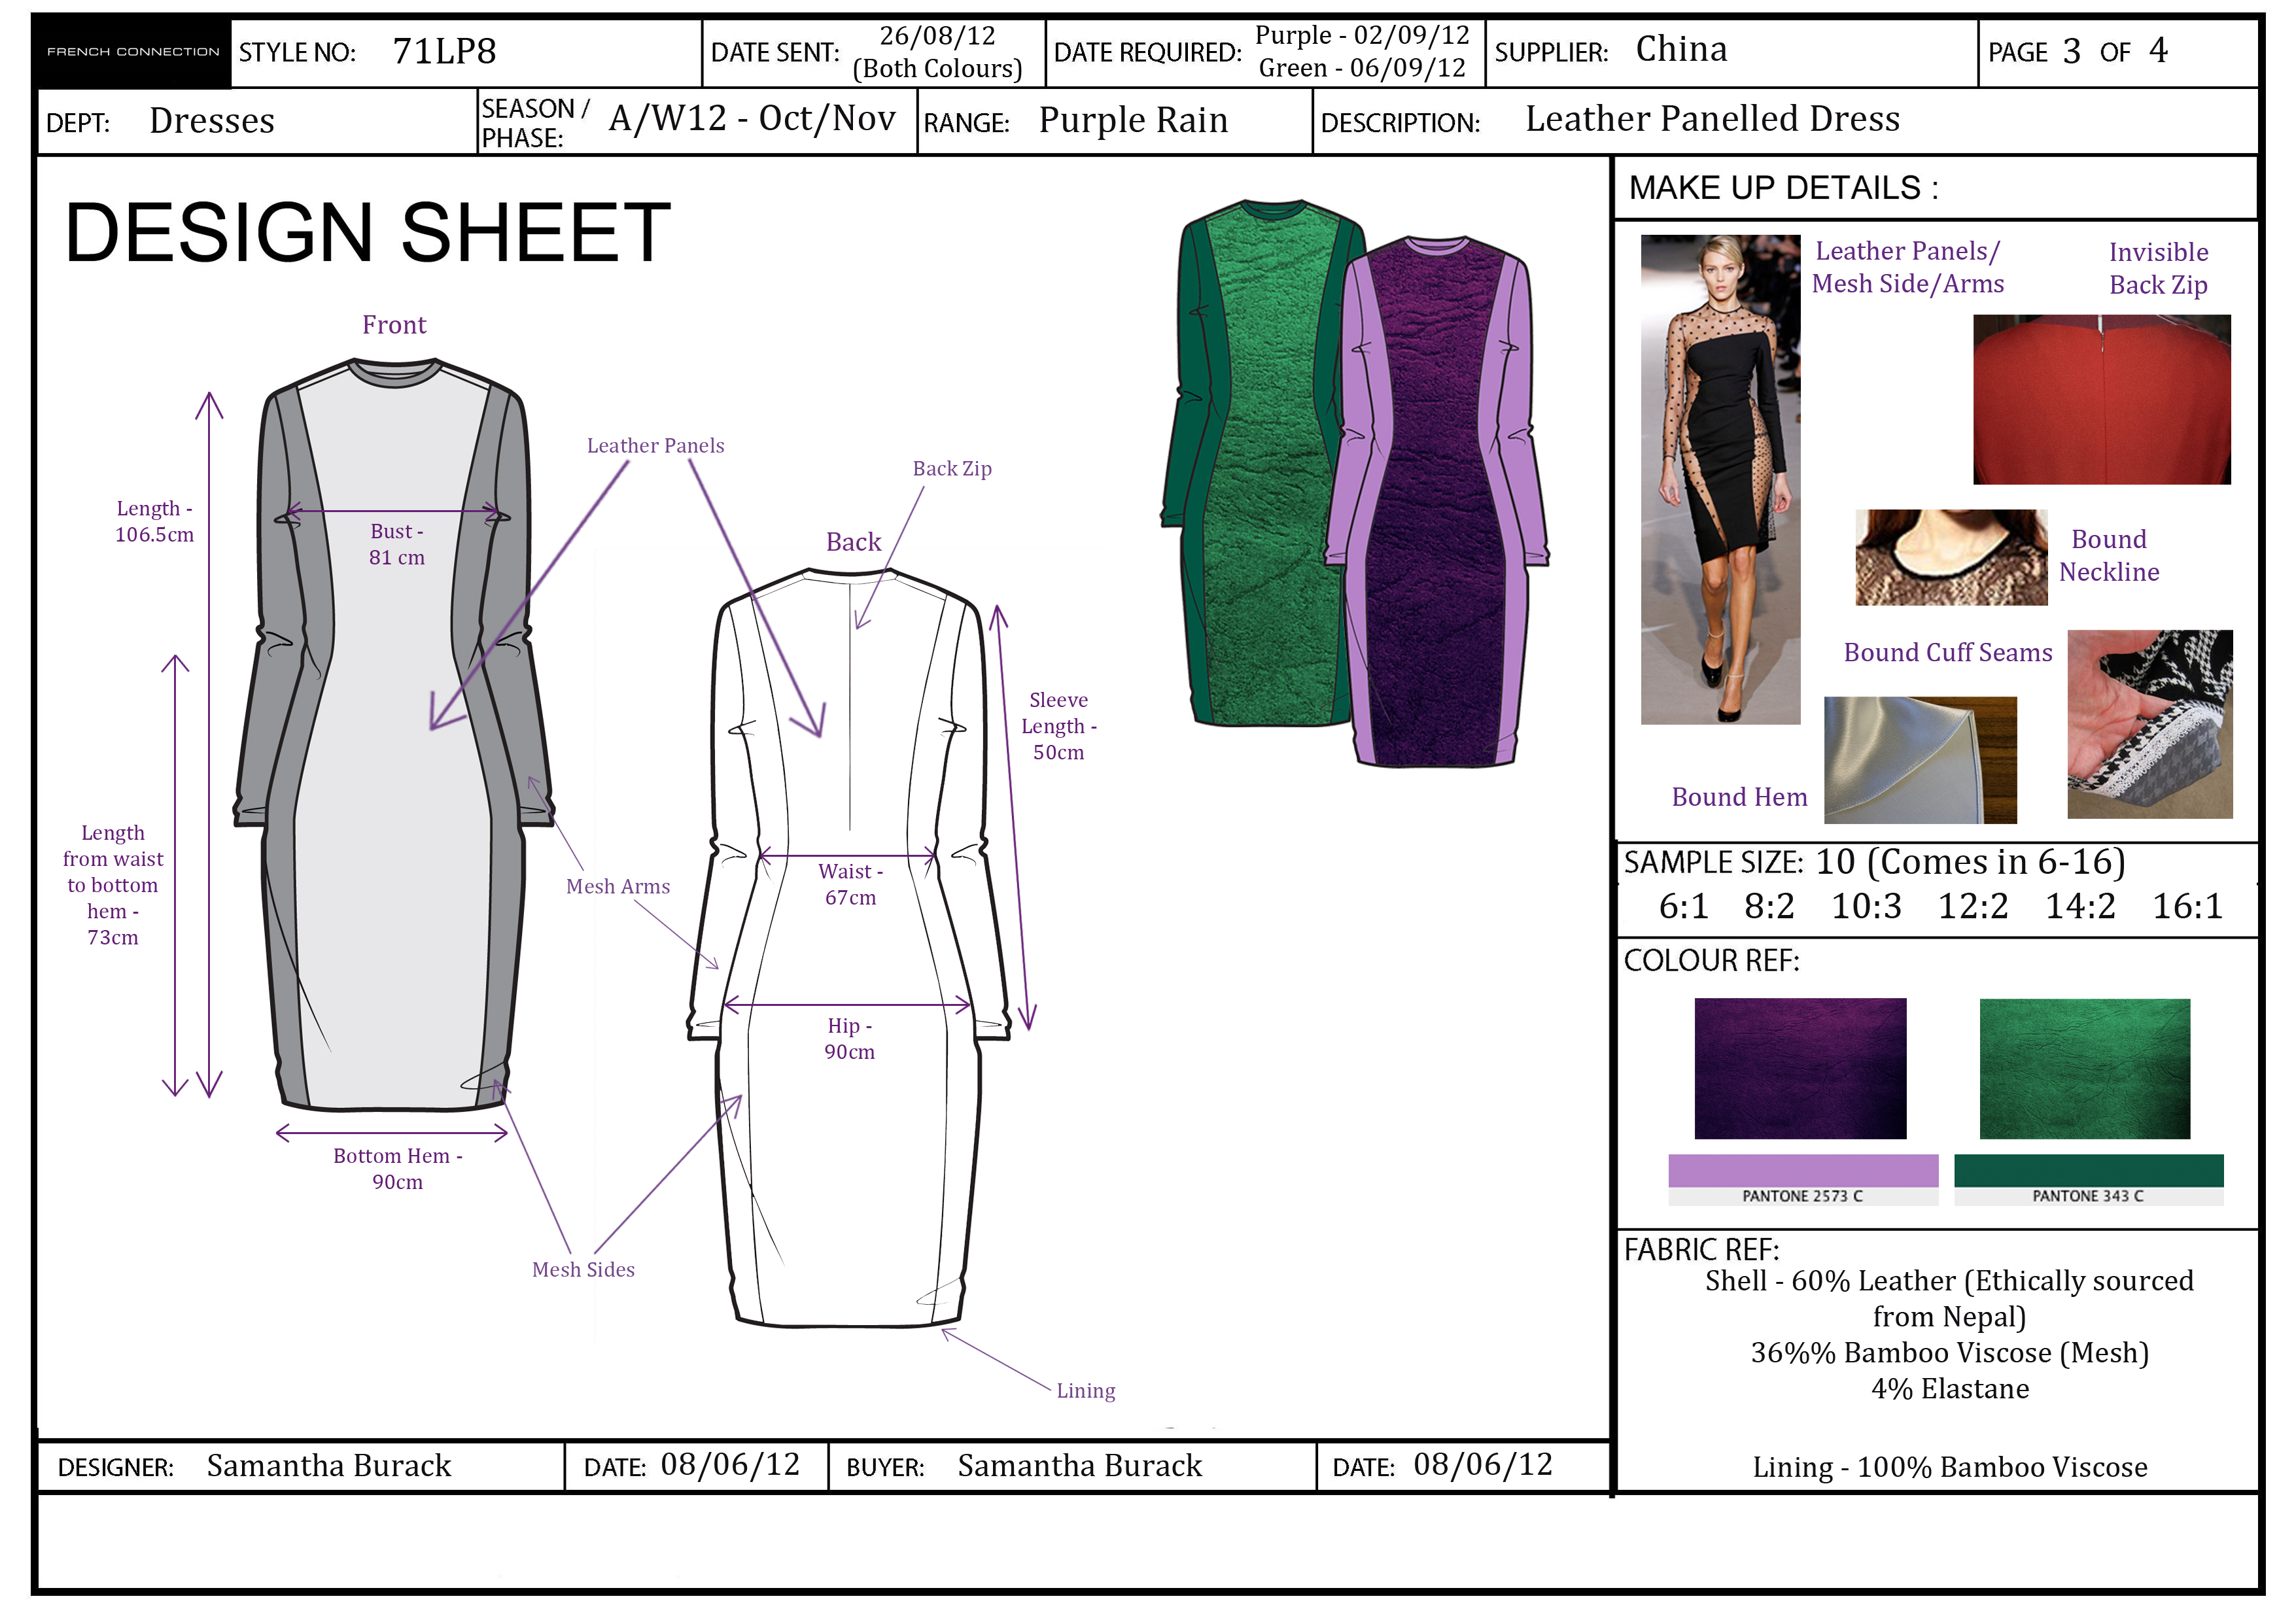 Spec Sheet Template For Garments